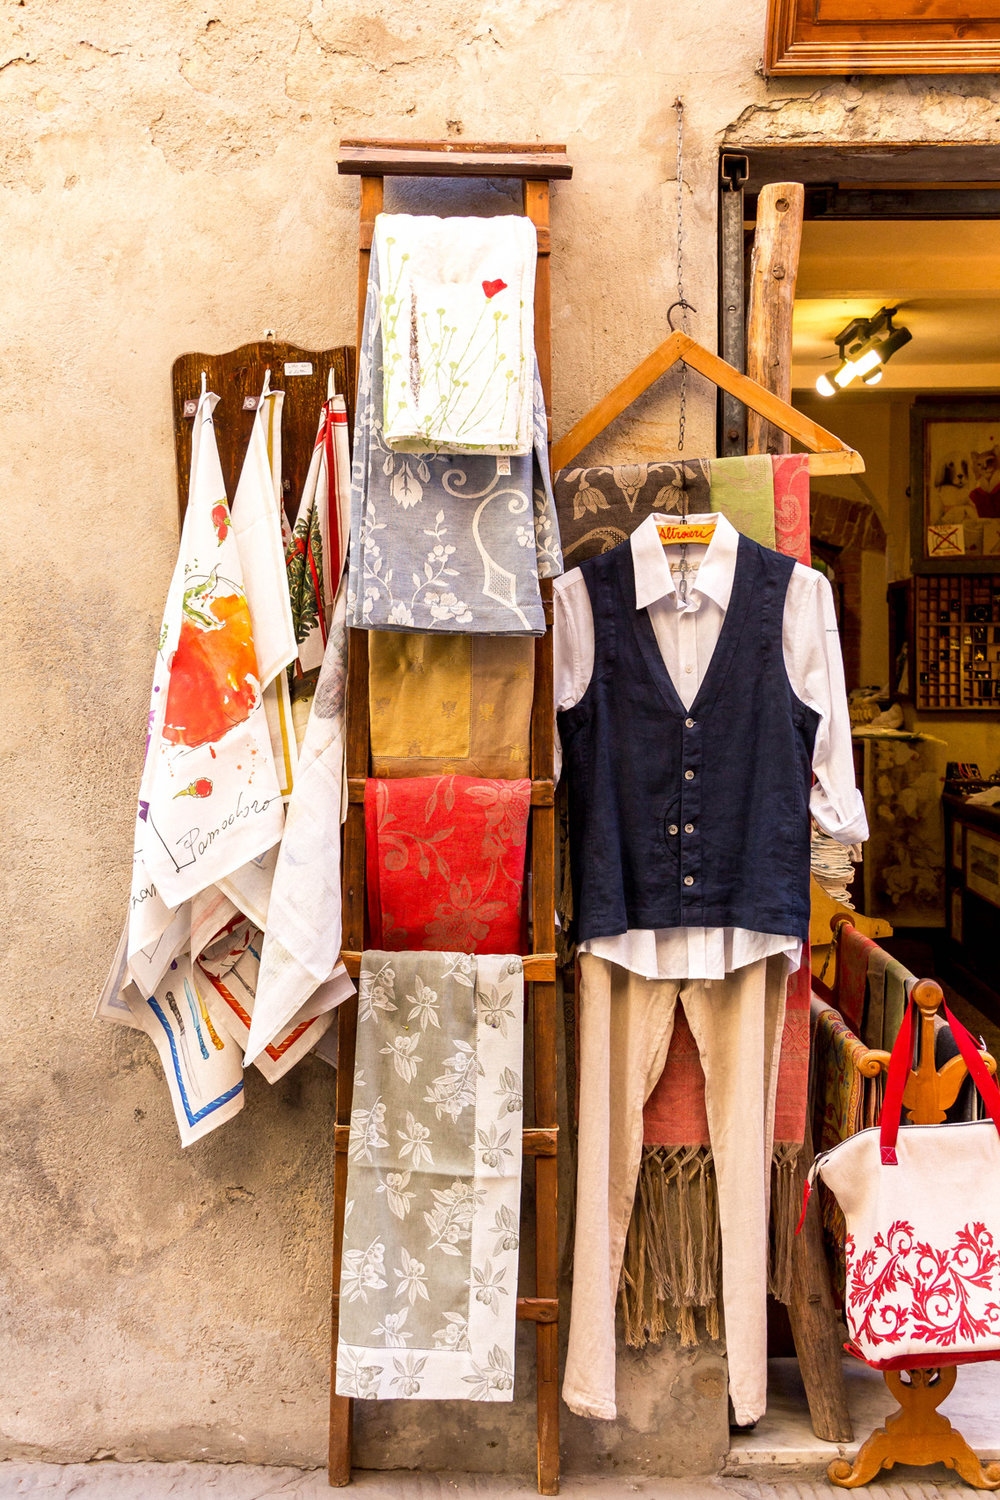 Linen shop in Pienza, Tuscany